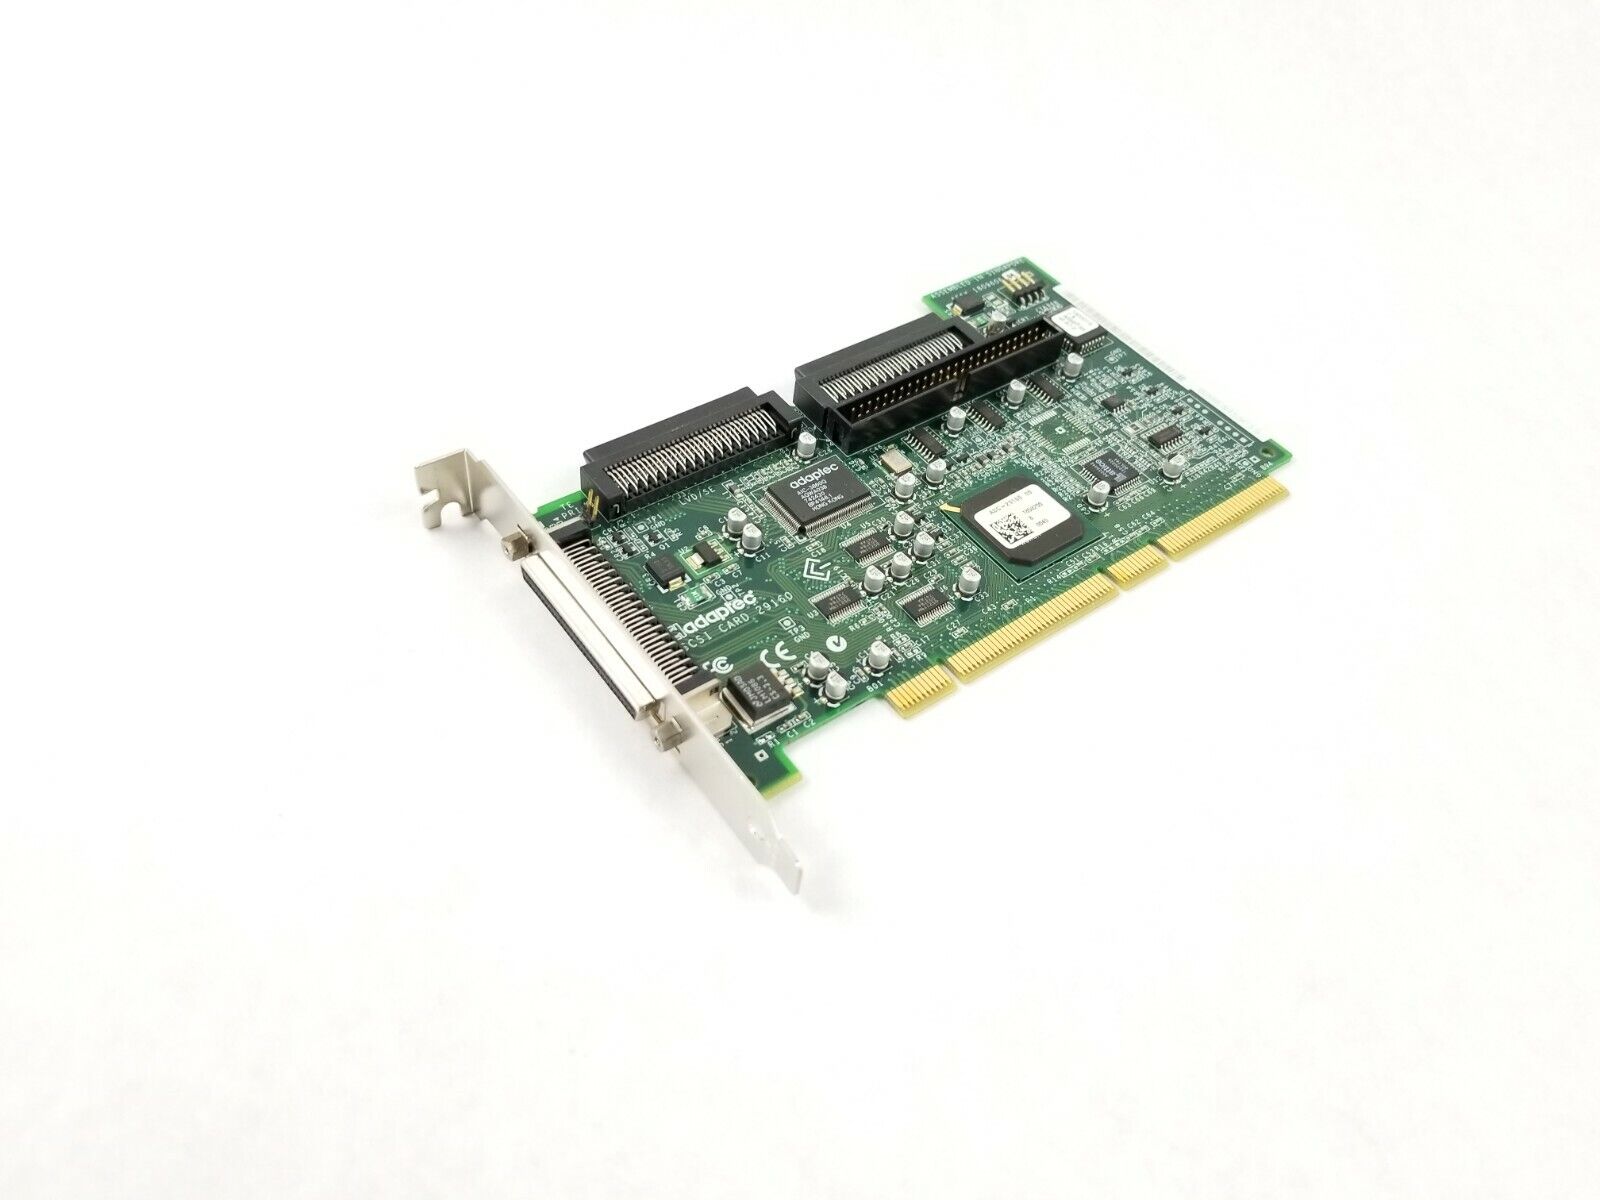 Adptec ASC-29160 PCI-X SCSI Ultra 160 Controller Card